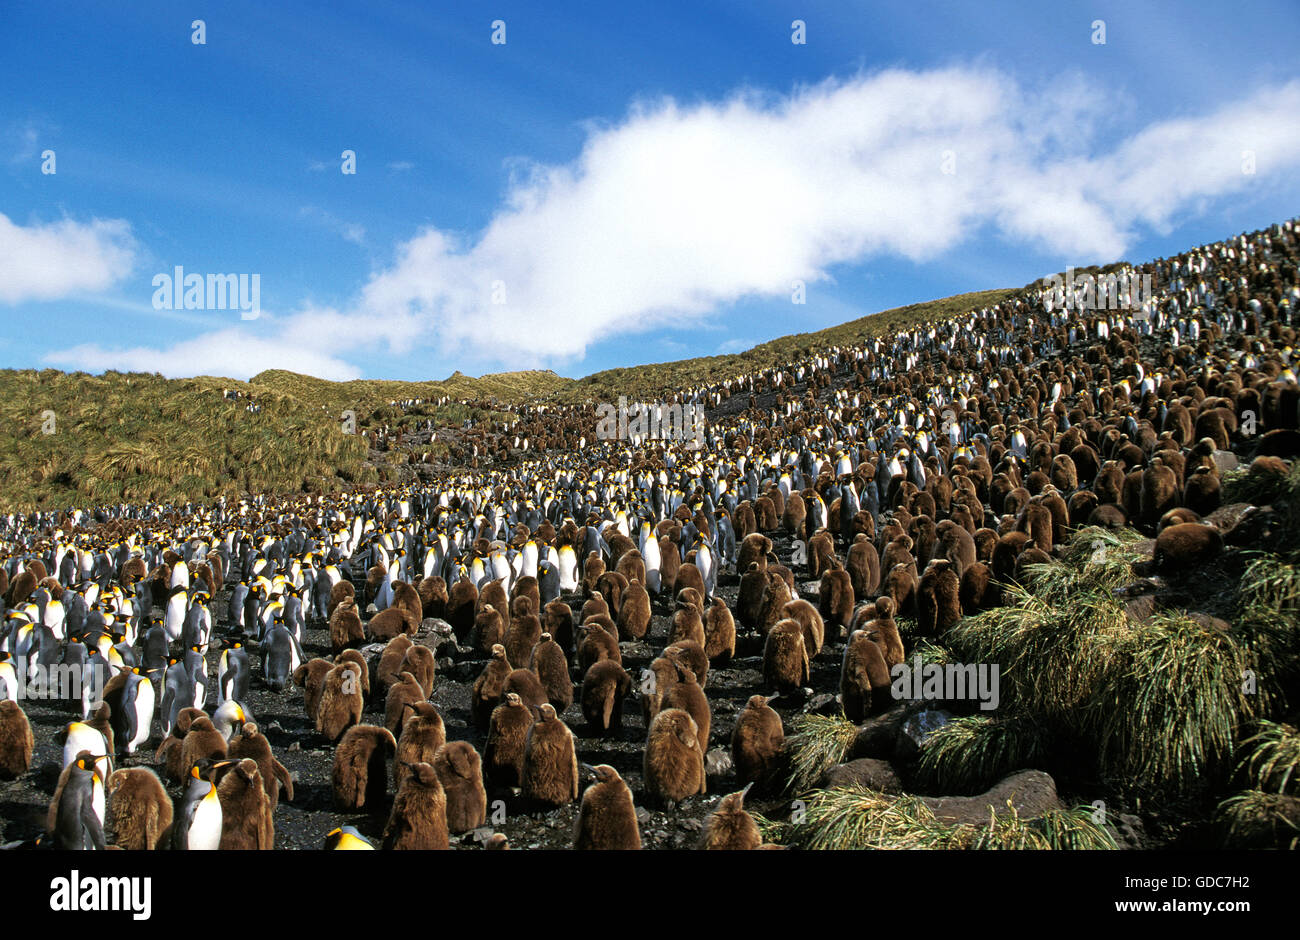 King Penguin, aptenodytes patagonica, Colony at Salisbury Plain, South Georgia Stock Photo